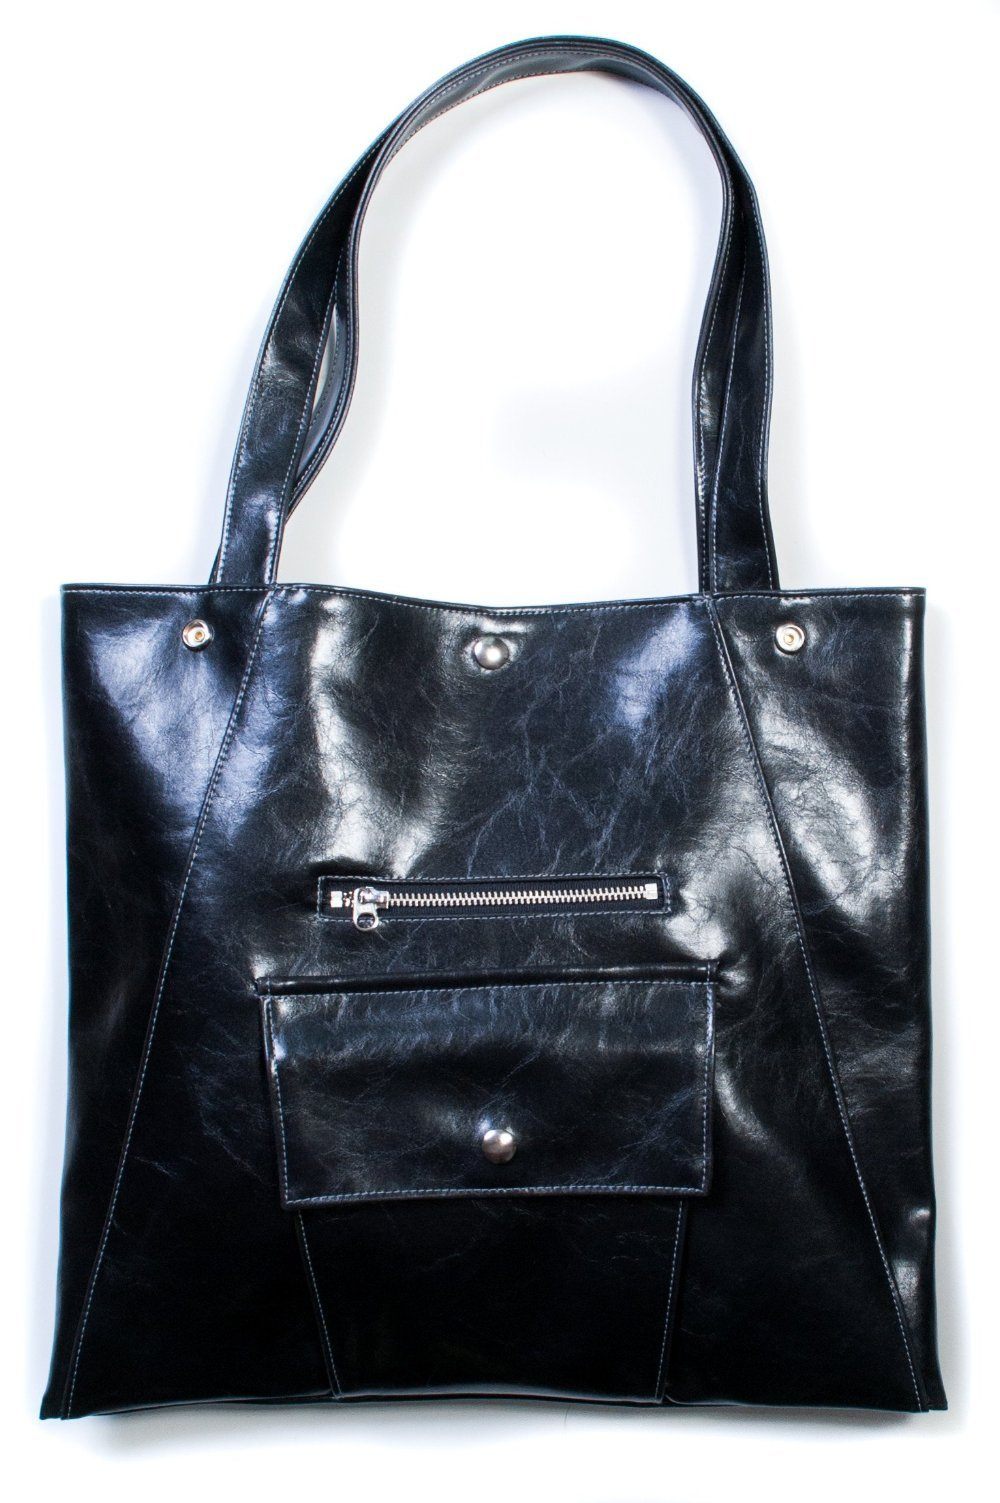 Womens Tote Bag - Metier Tote - Black Vegan Leather